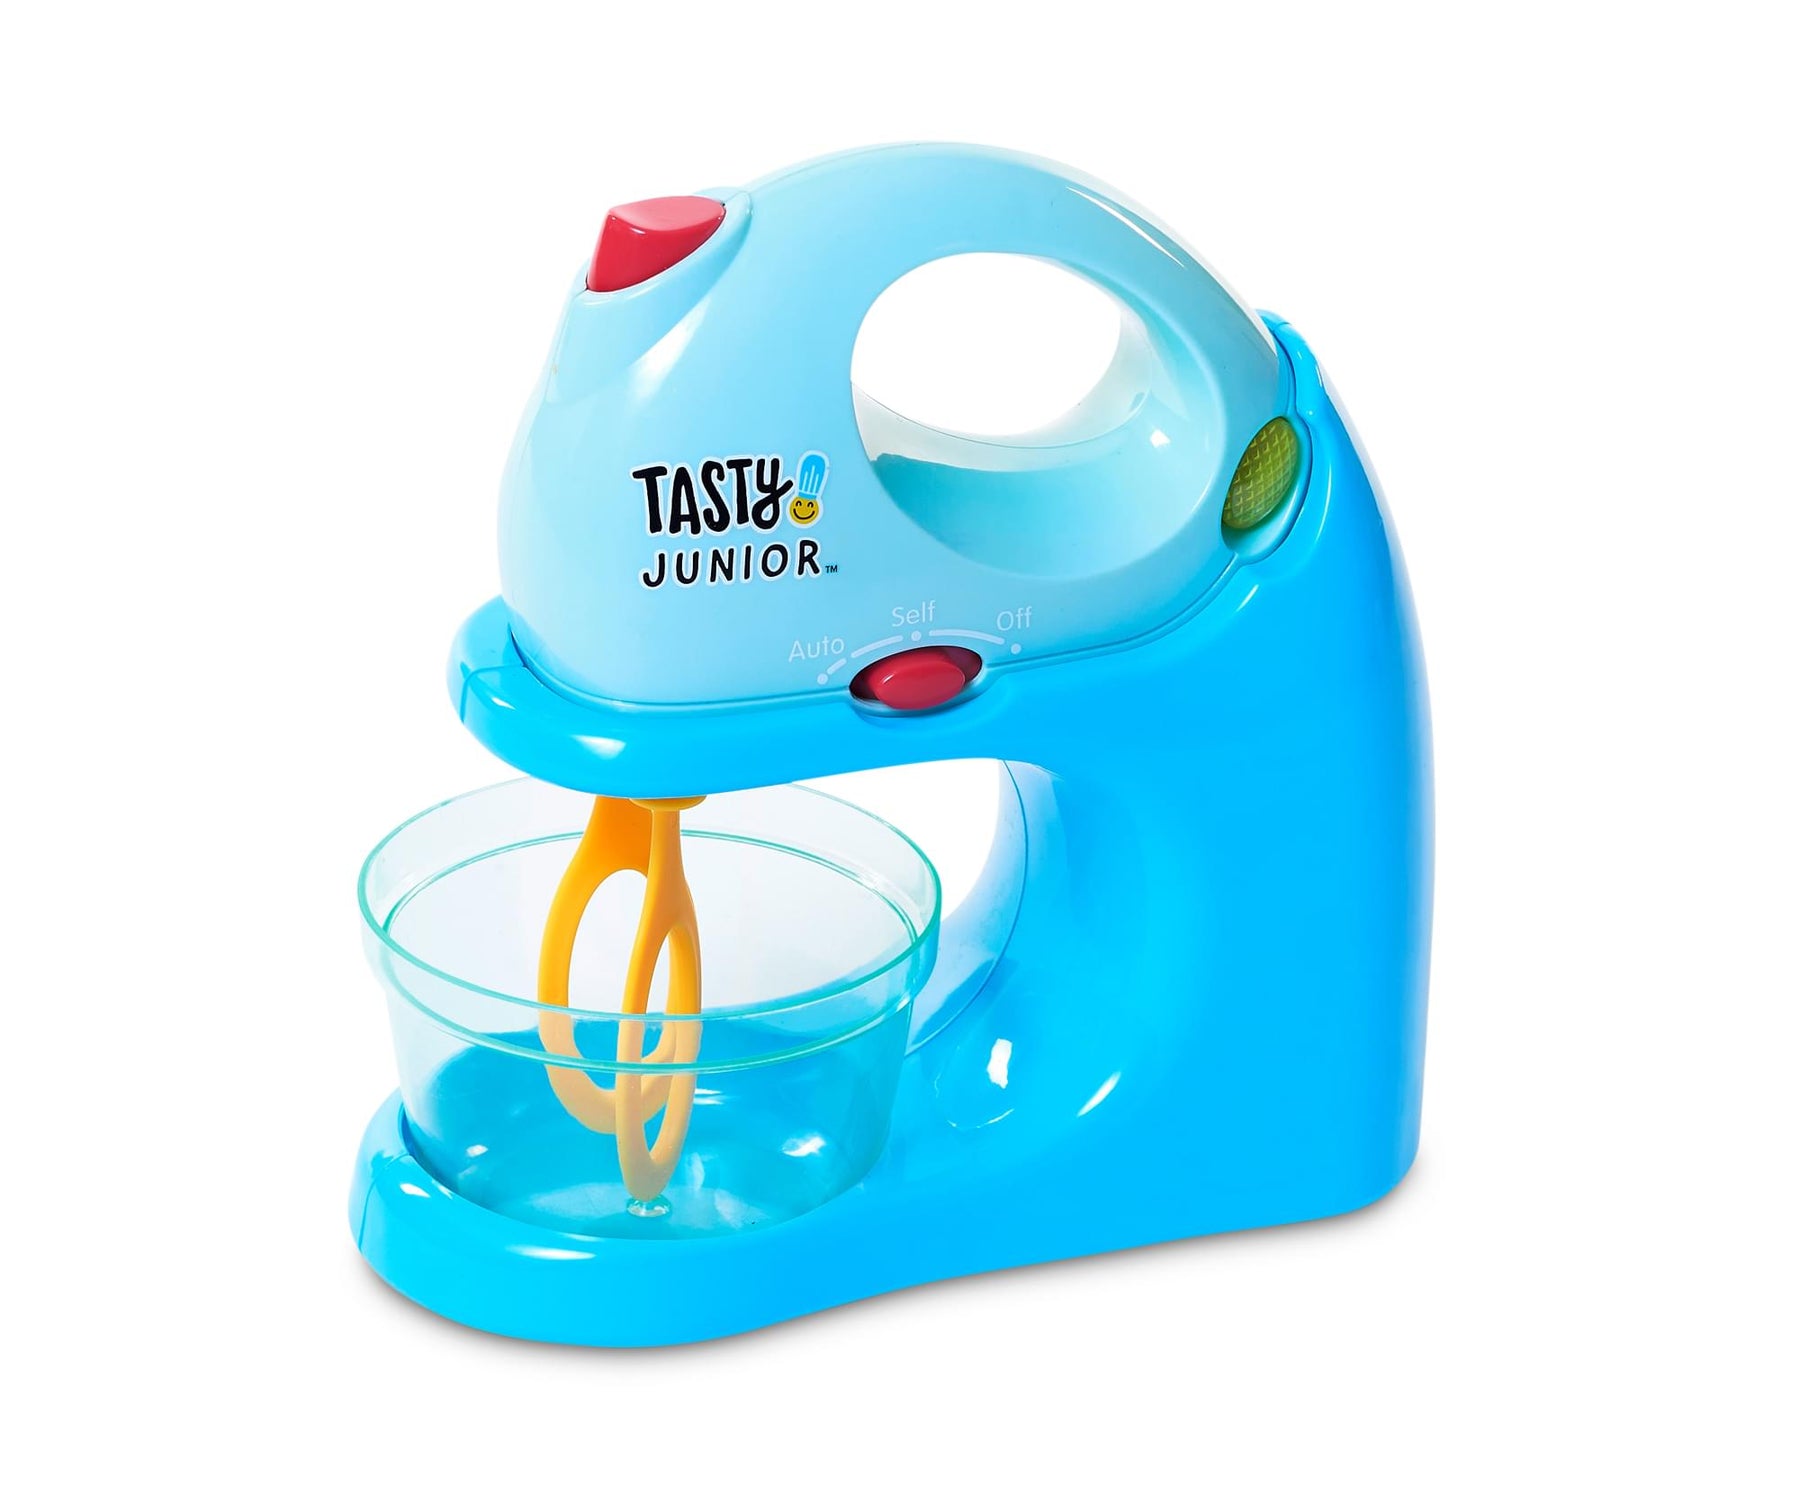 Tasty Junior Mixer Electronic Toy Kitchen Set